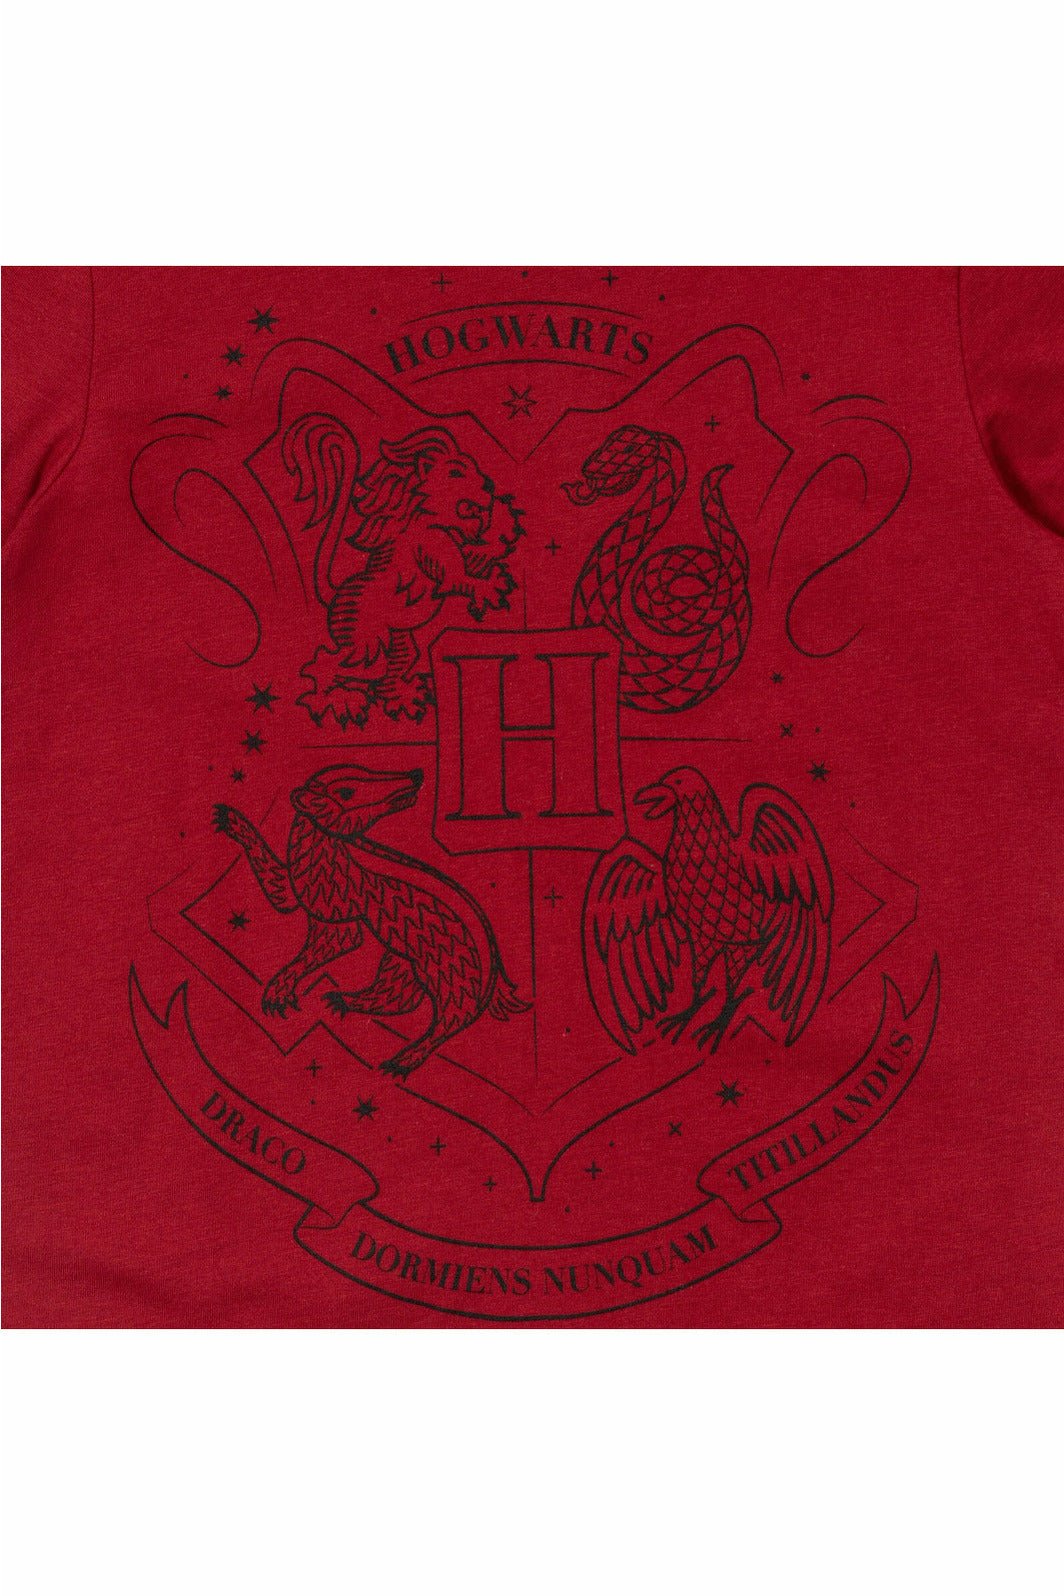 Hogwarts 2 Pack Graphic T-Shirts - imagikids